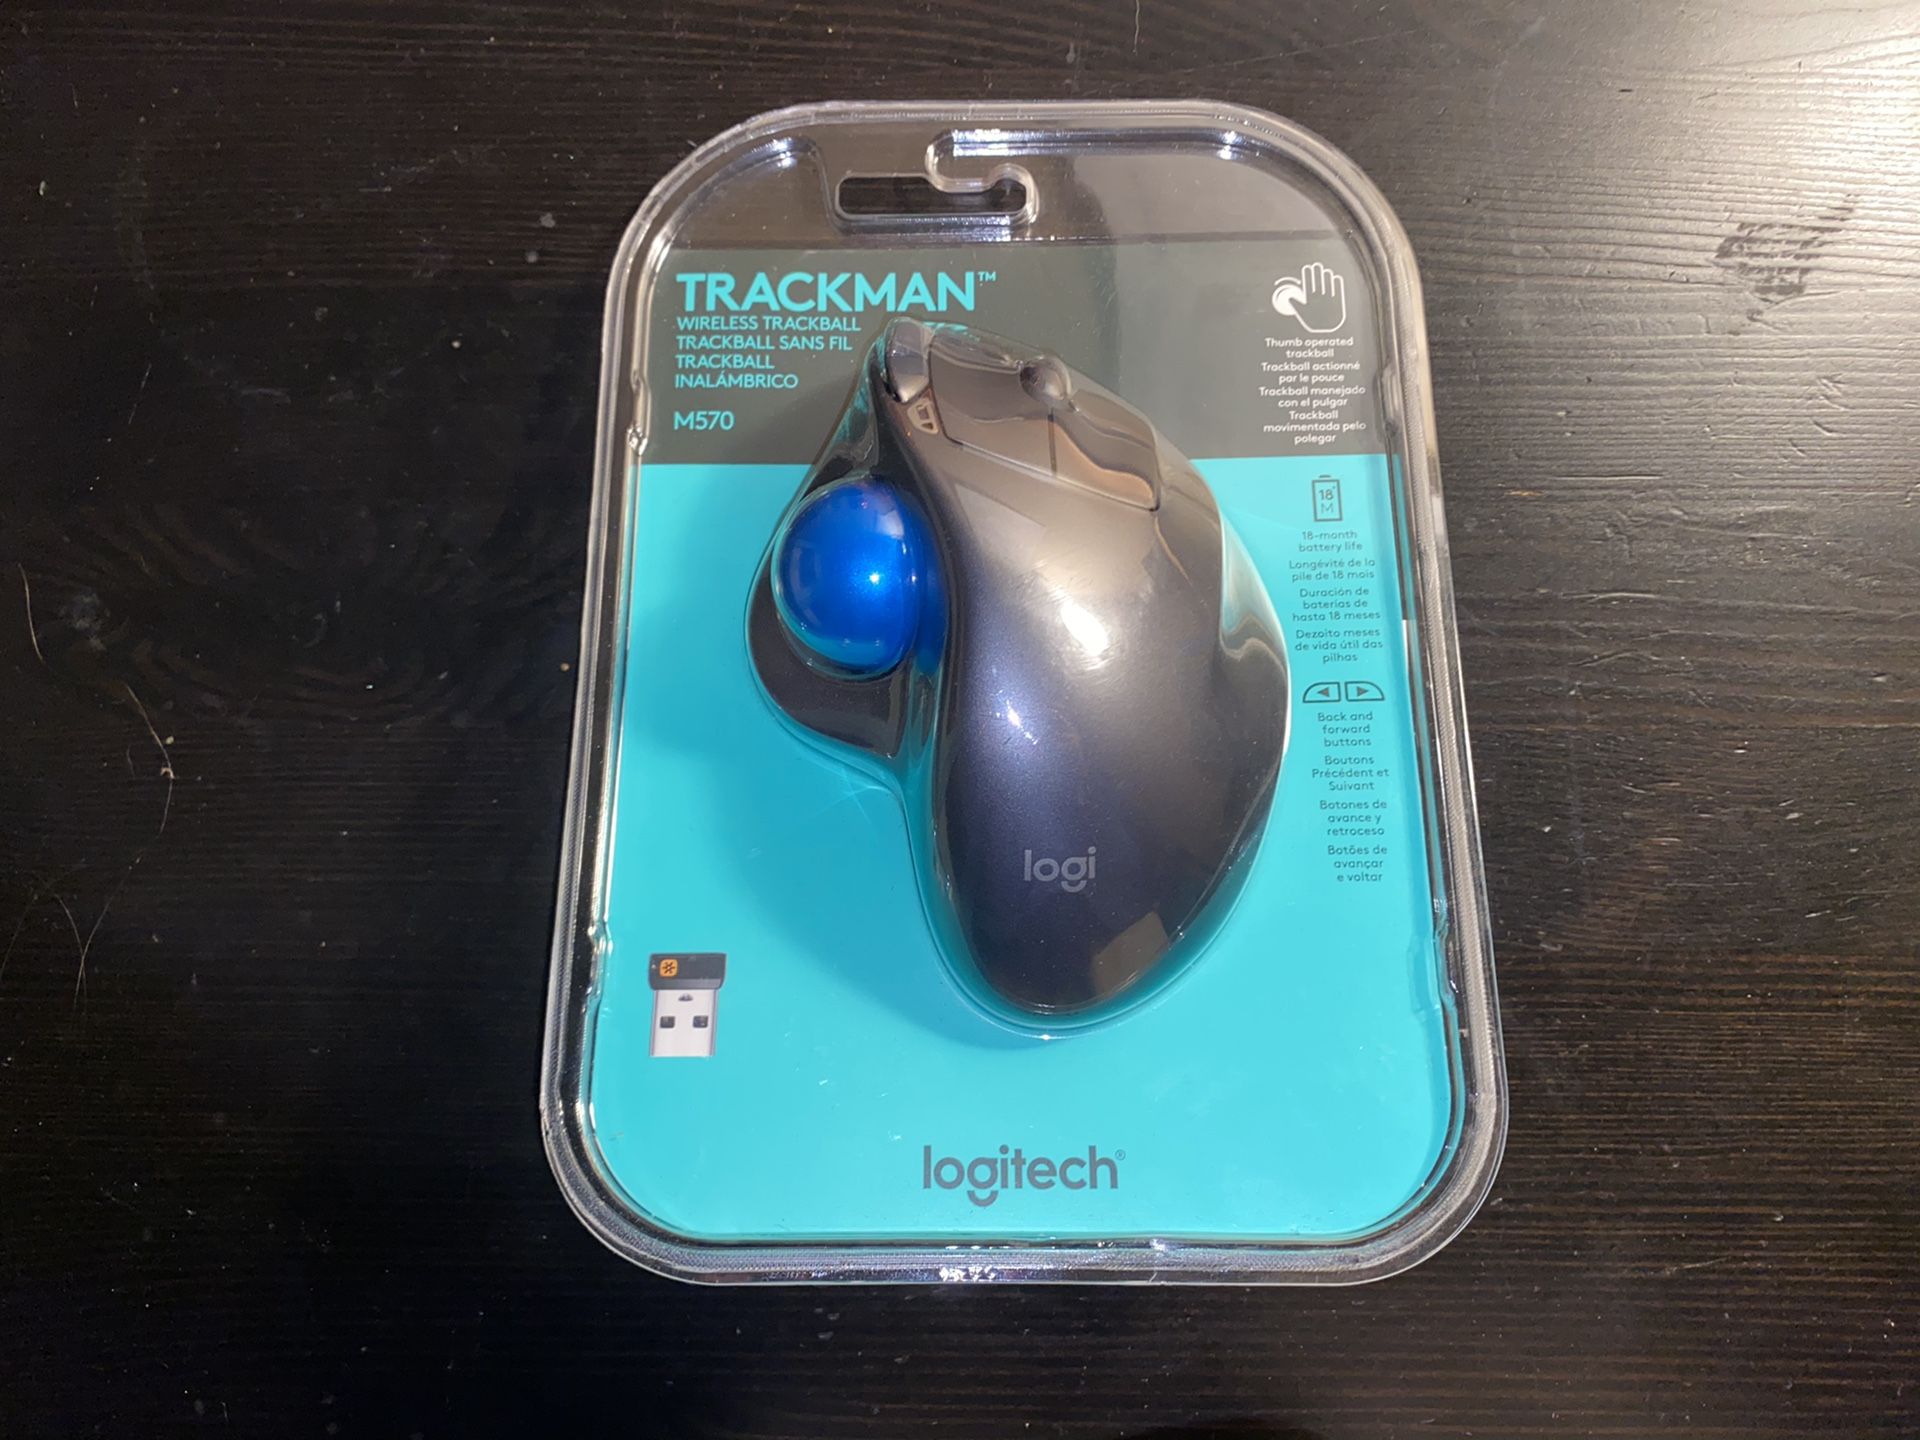 TRACKMAN Logitech wireless mouse/controller